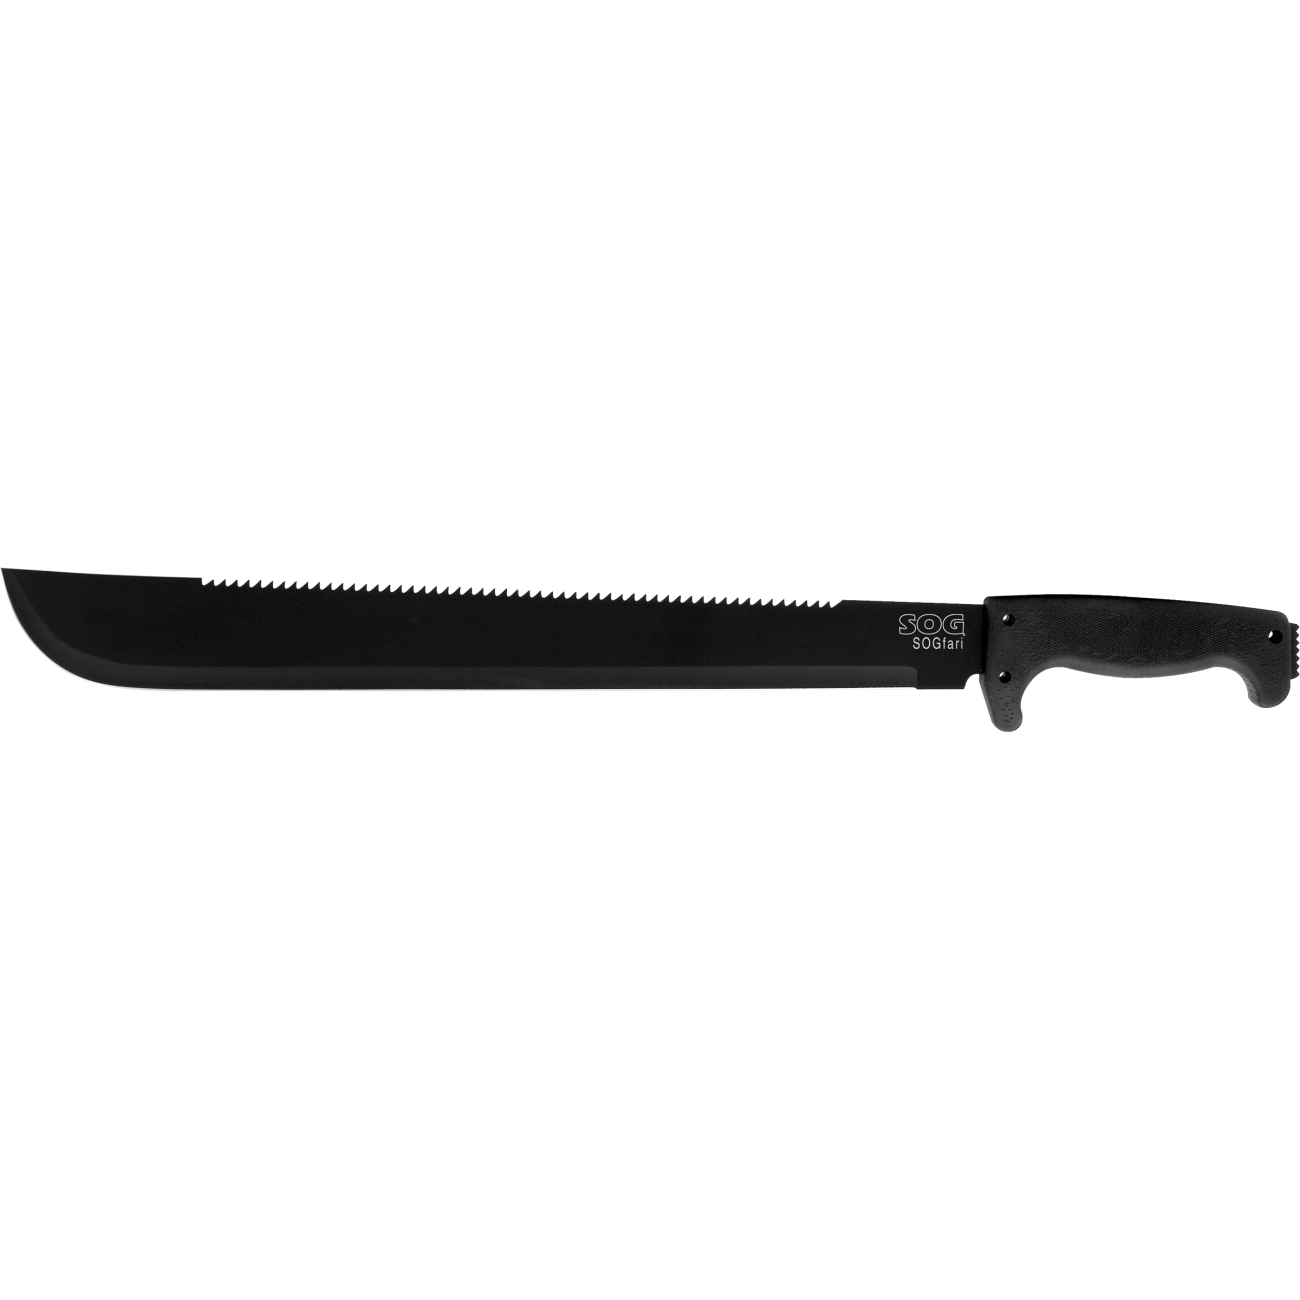 KNIFE, SOGFARI MACHETE - 18, MC-02